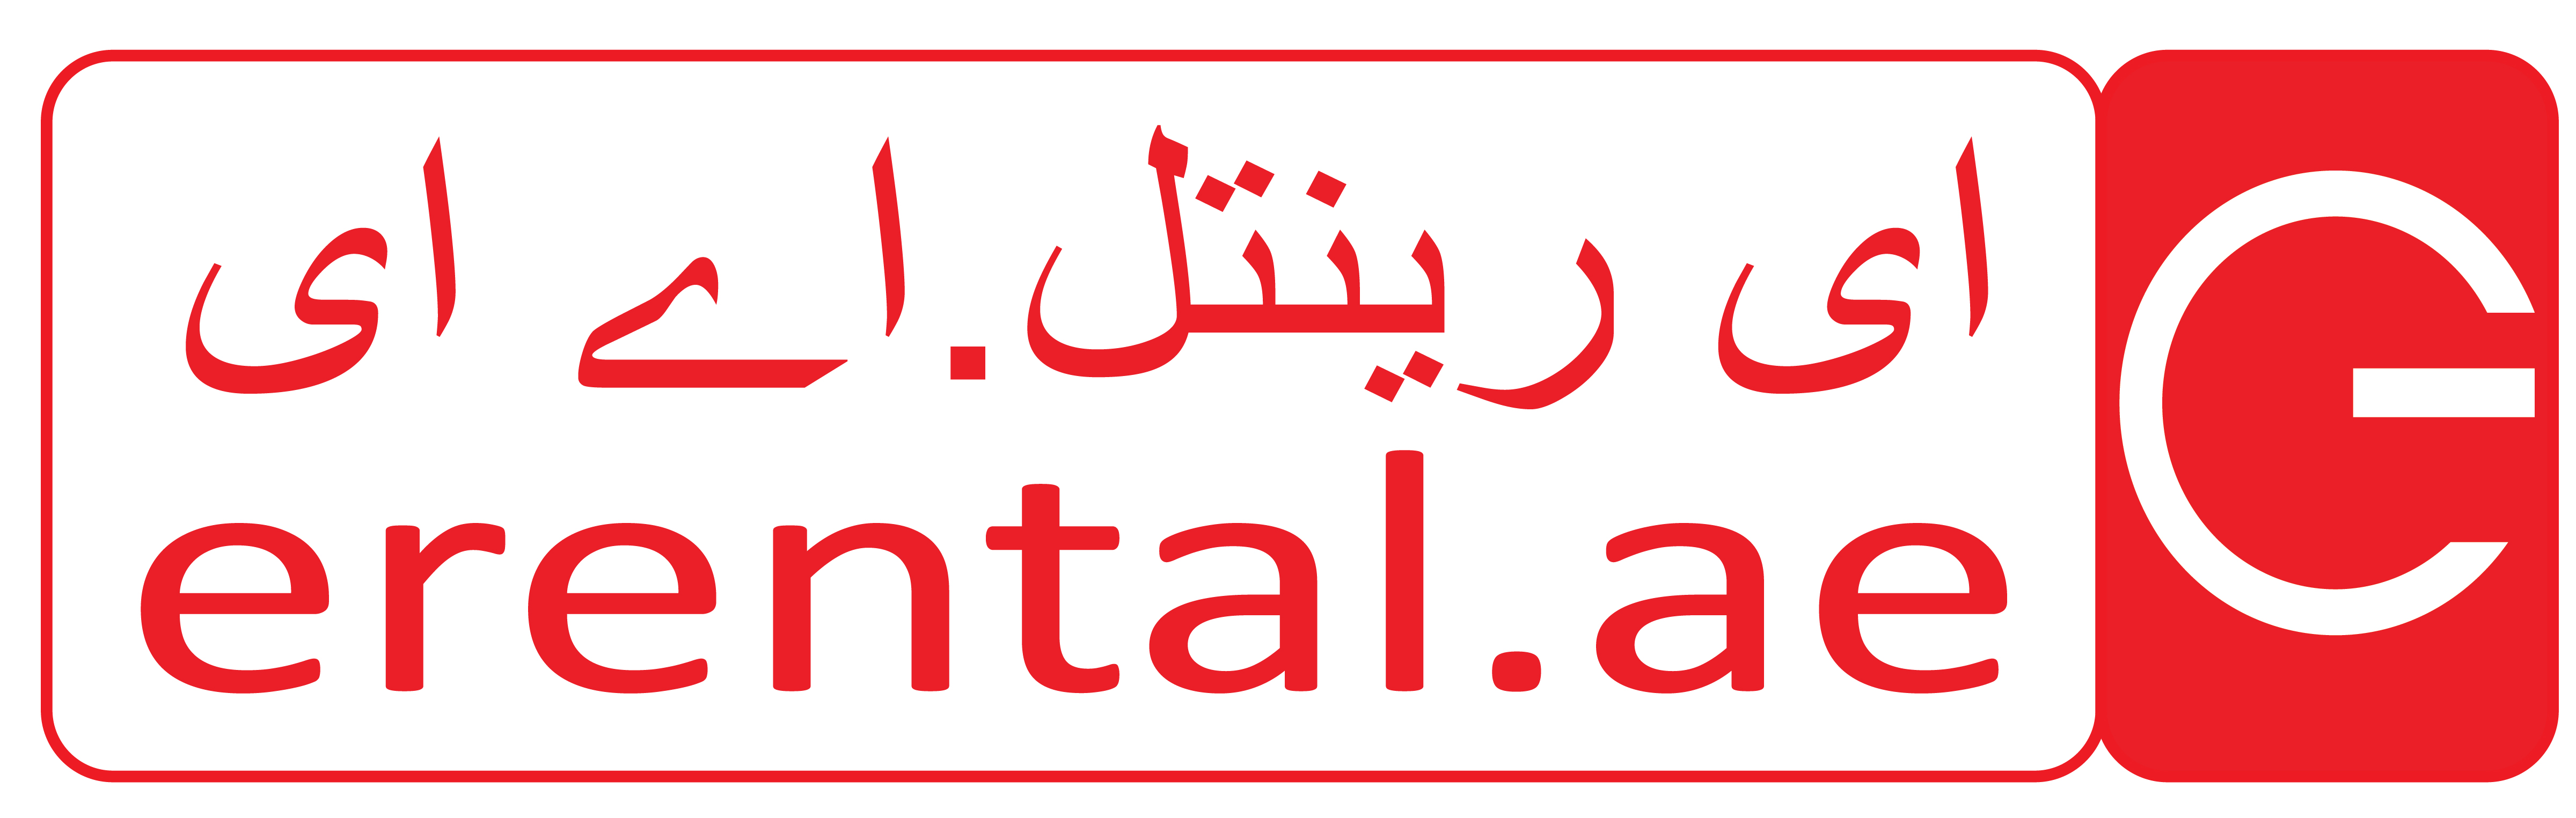 anyrentals-1604912169_logo.jpg